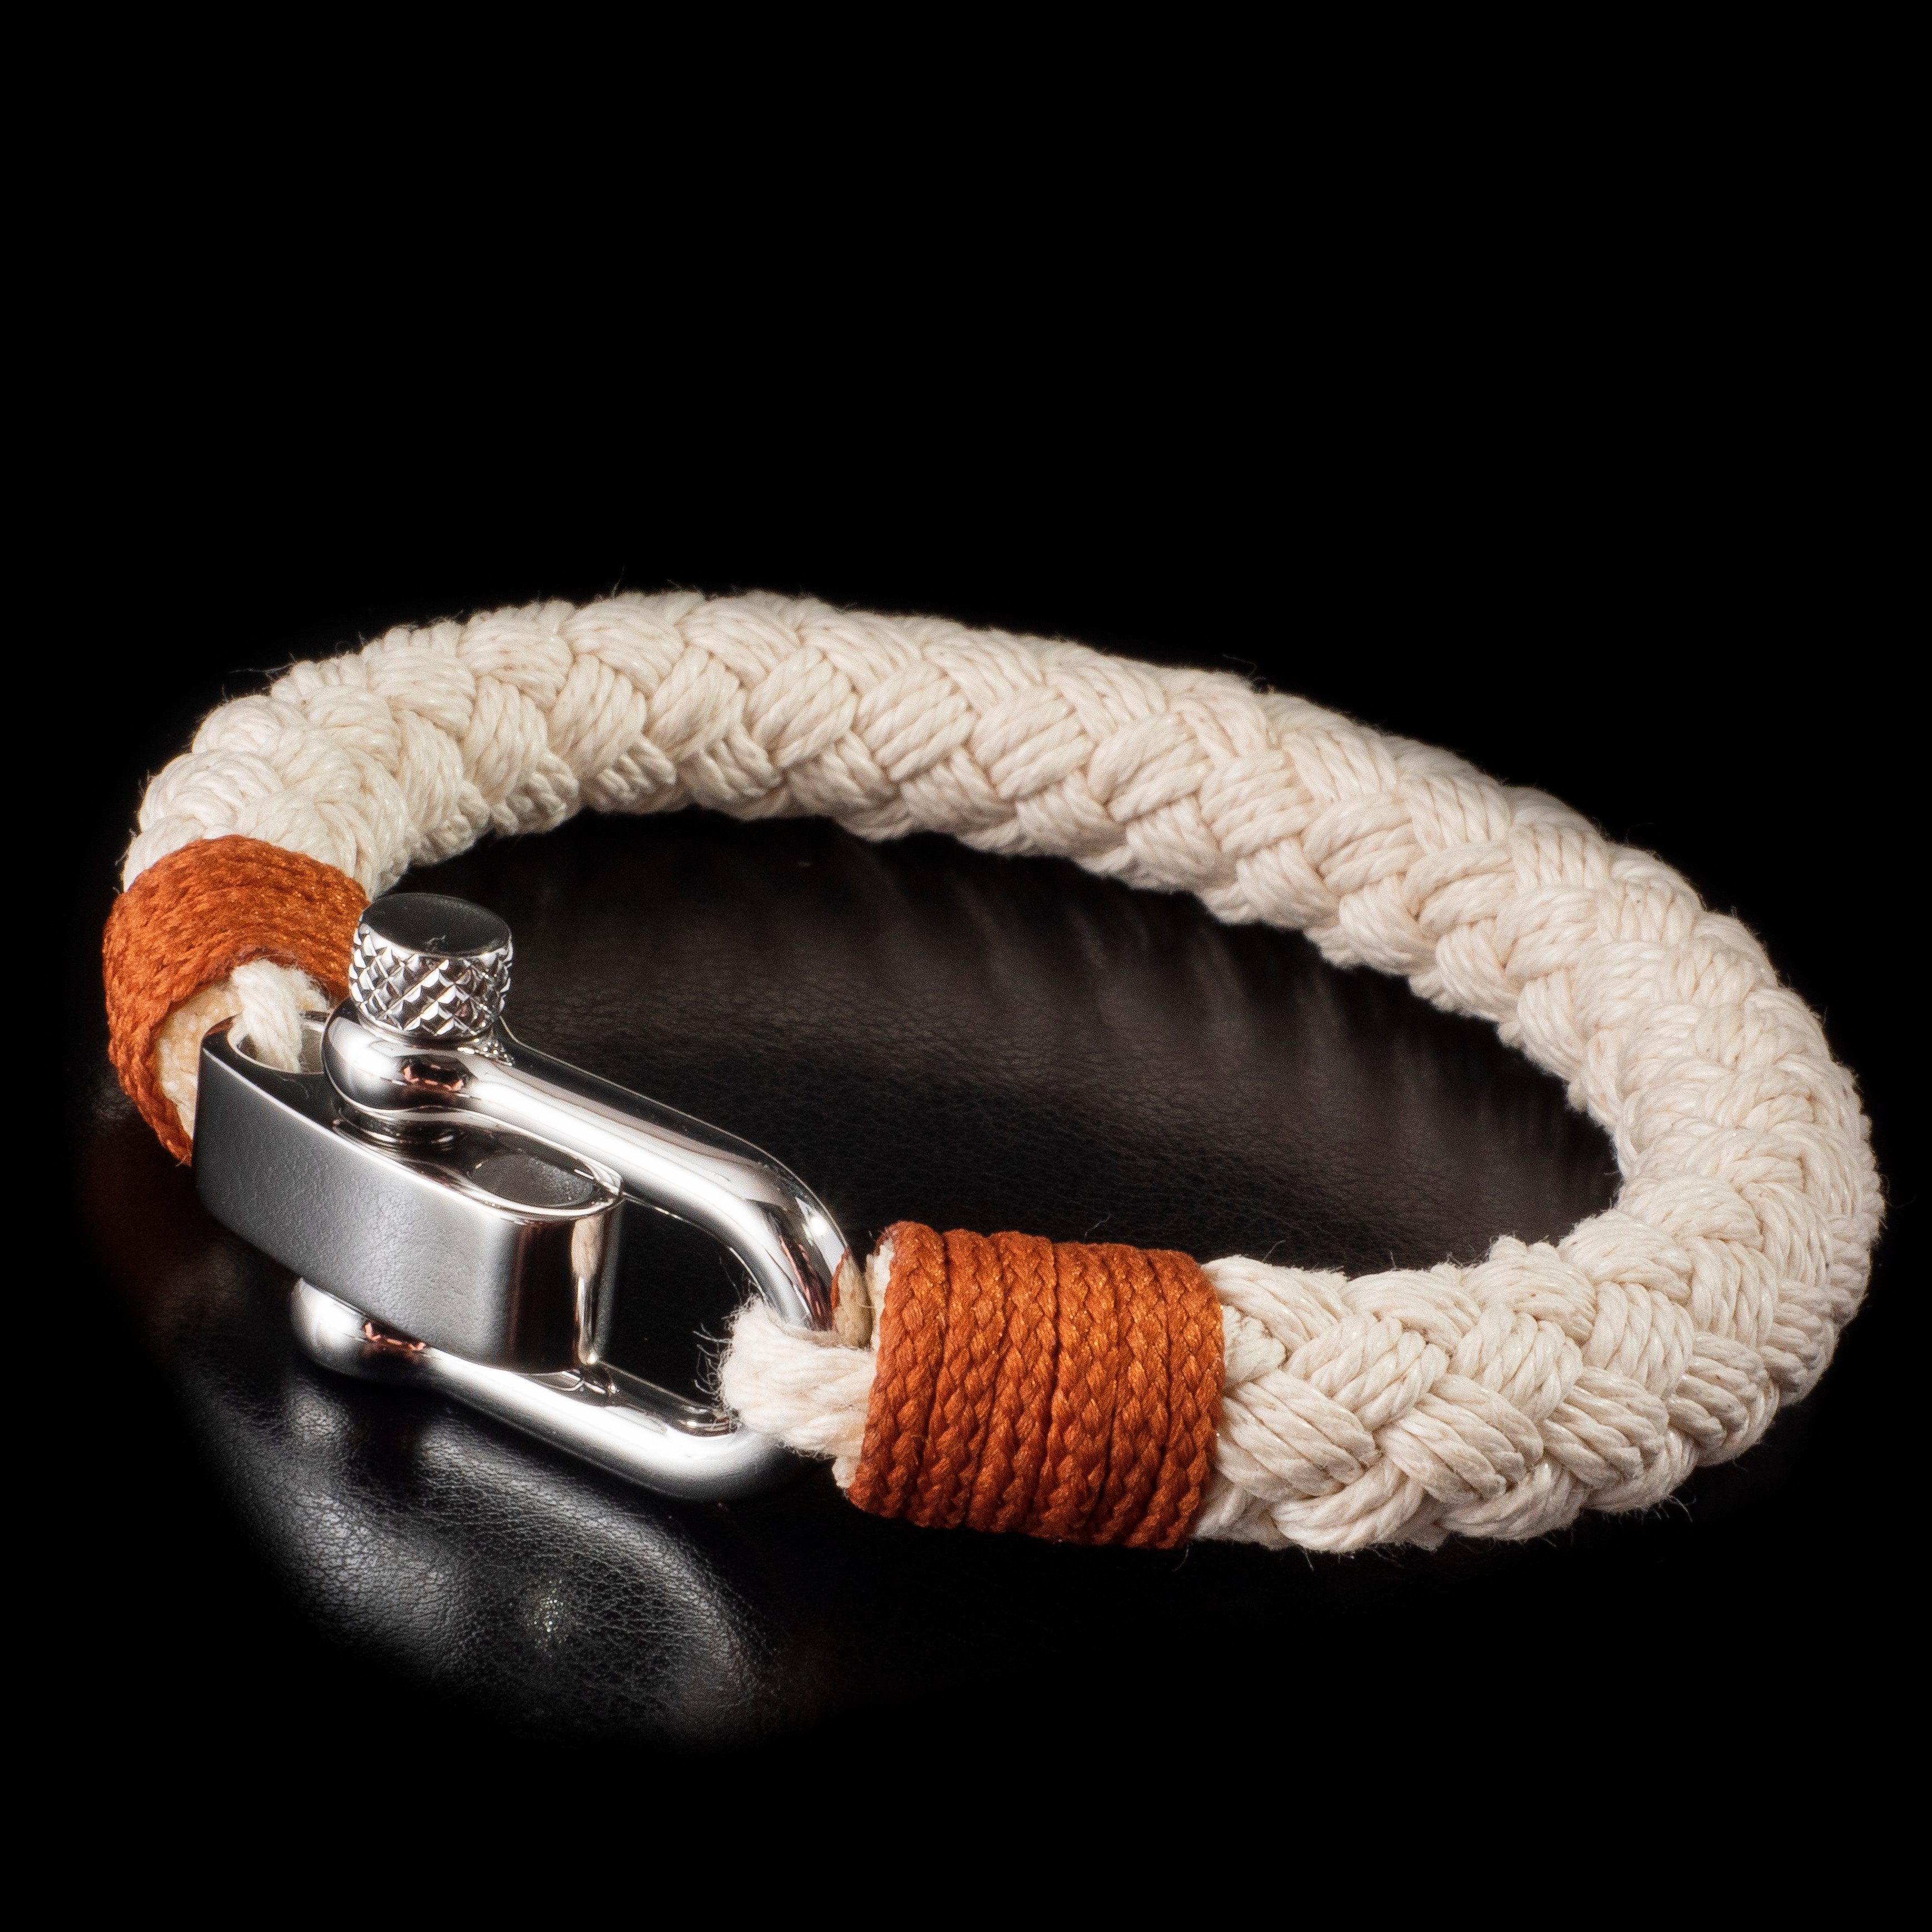 Segeltau (Edelstahl, Maritime aus verschluss nautics, Armband Schäckel Armband Segeltau, handgefertigt) UNIQAL.de Casual Style, "RONA"